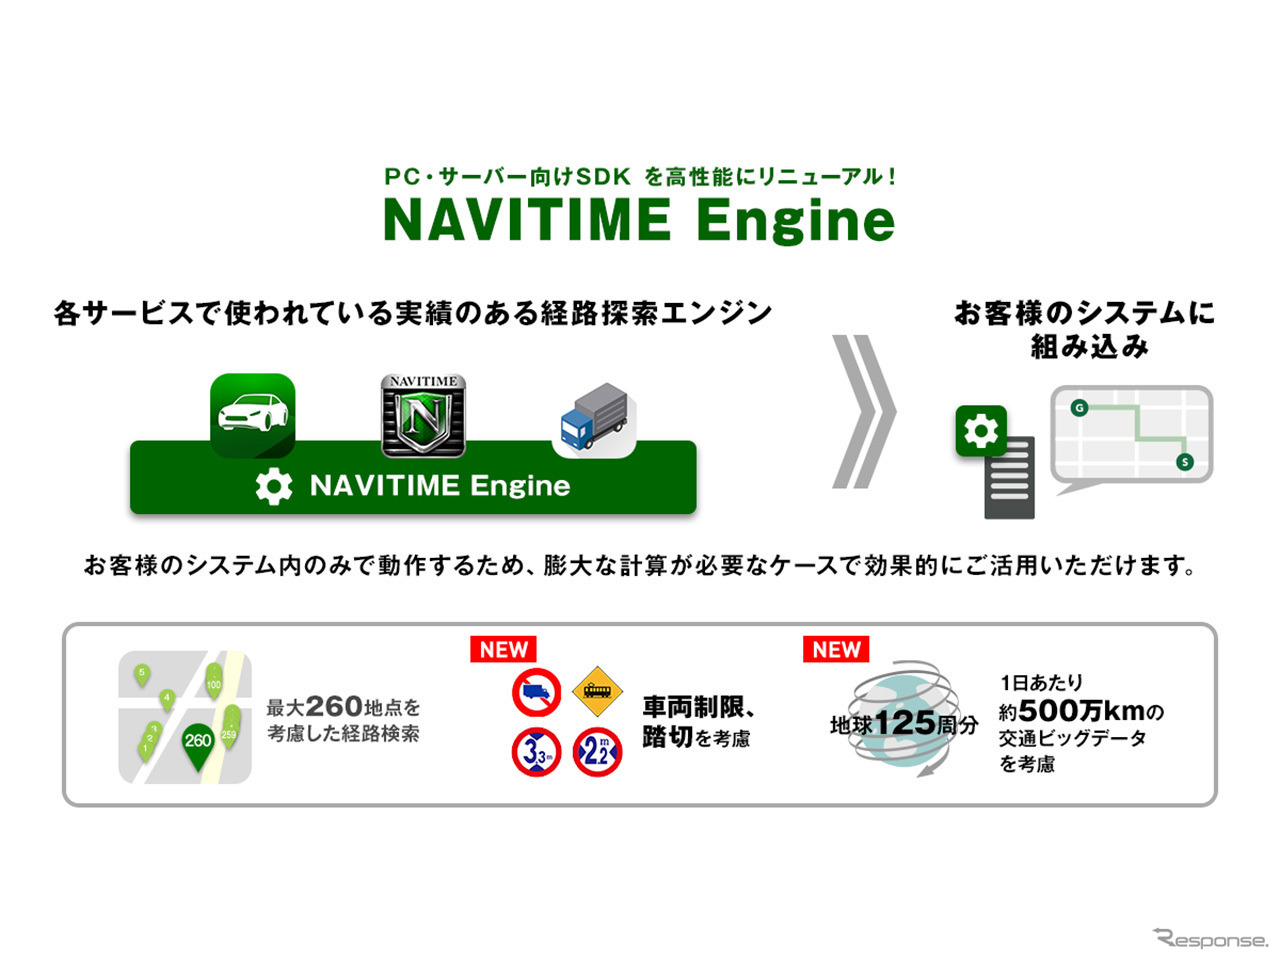 NAVITIME Engine